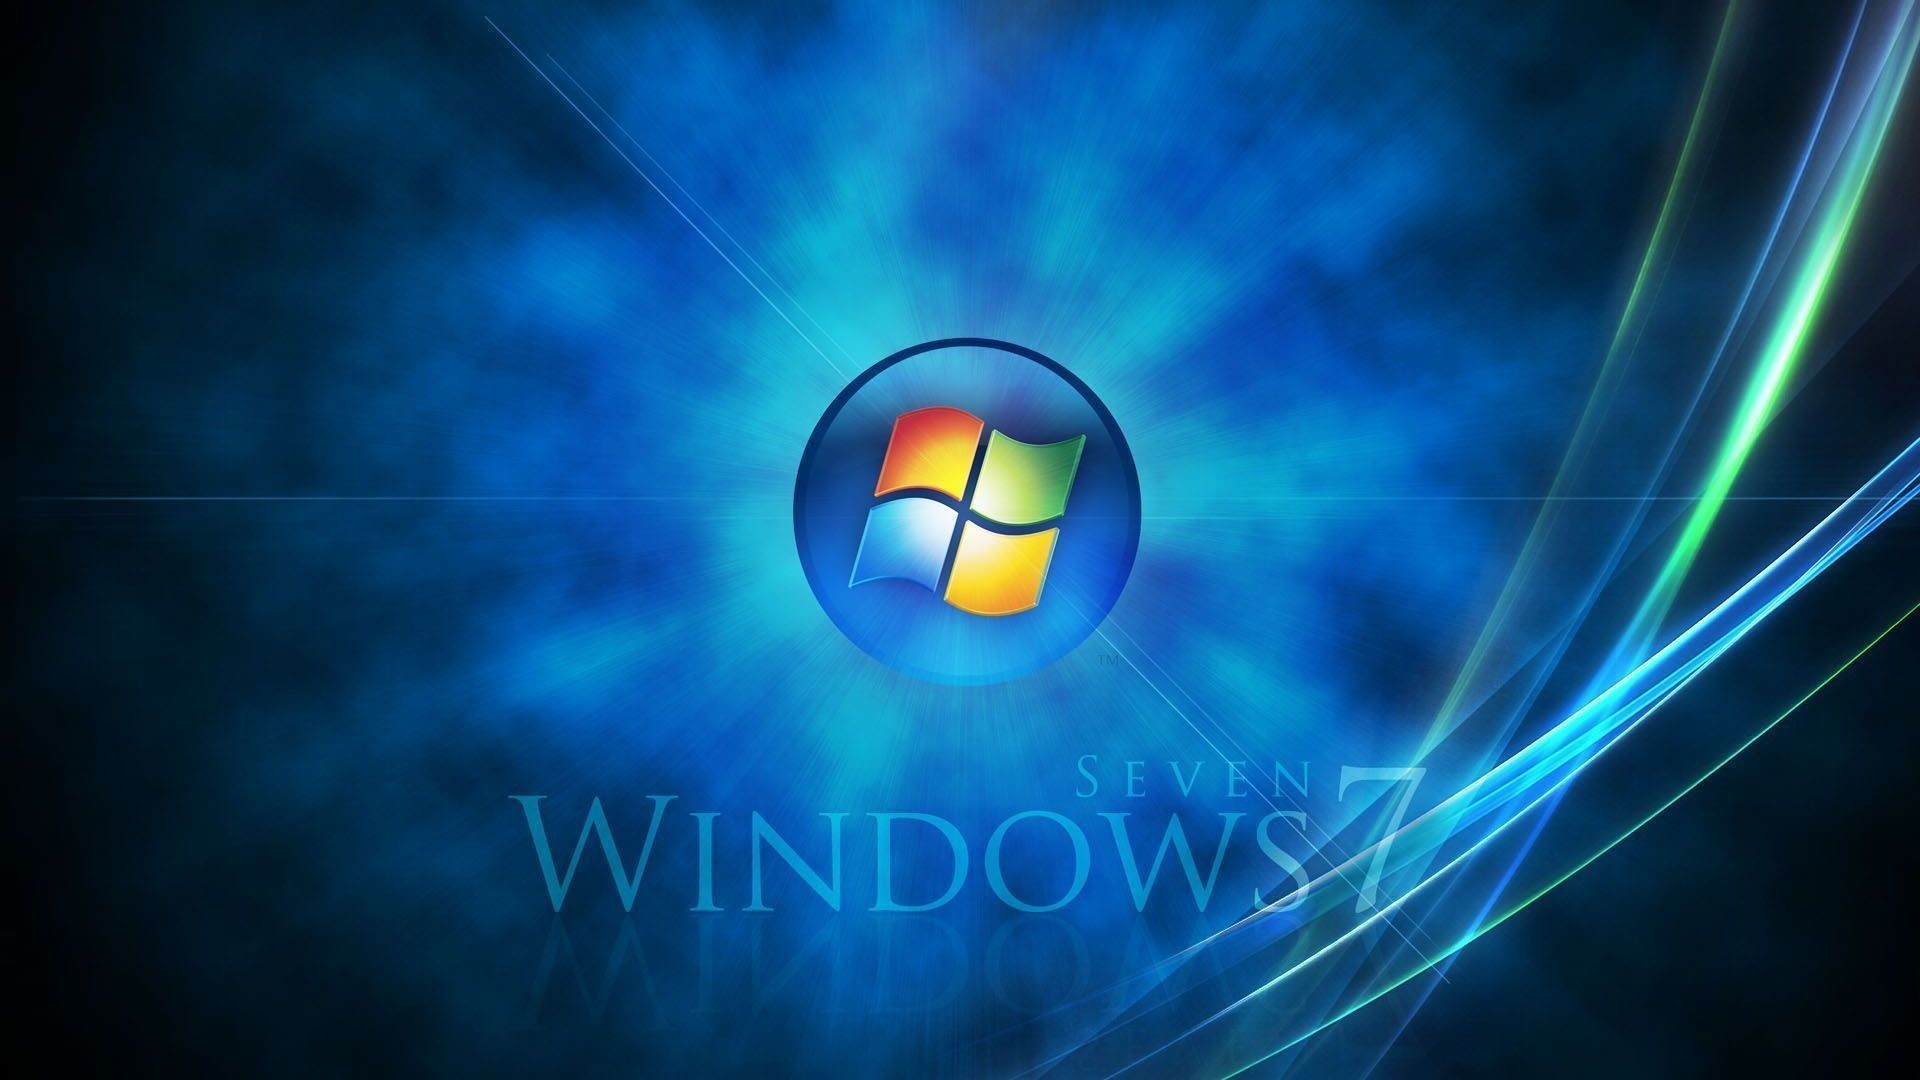 1920x1080 Windows 7 Hd Wallpapers 1080p - WallpaperSafari